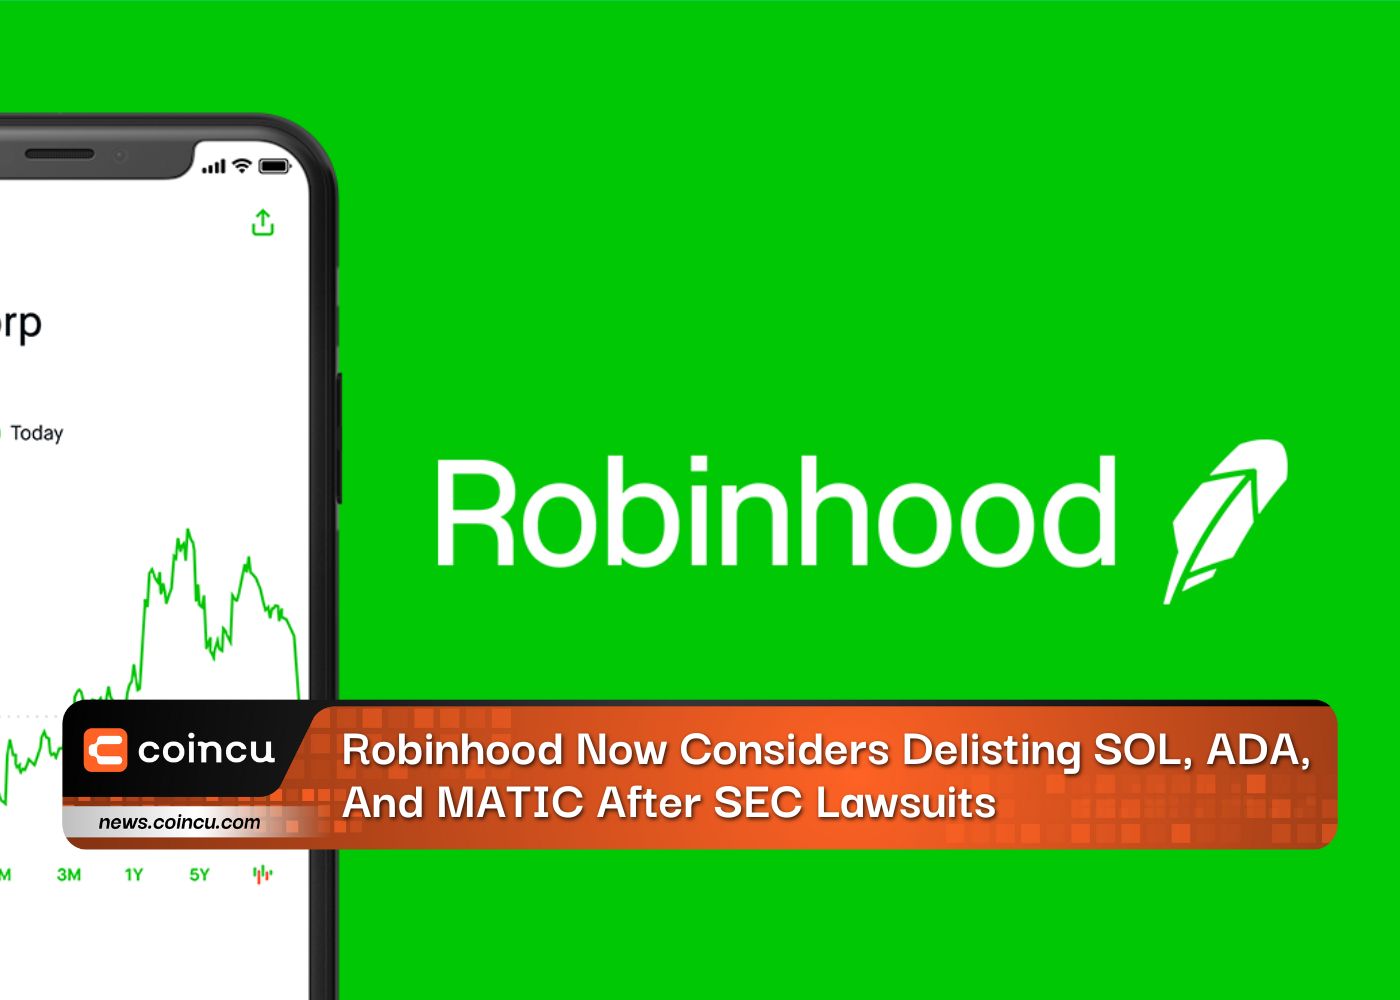 Robinhood envisage maintenant de supprimer SOL, ADA et MATIC après les poursuites de la SEC : rapport